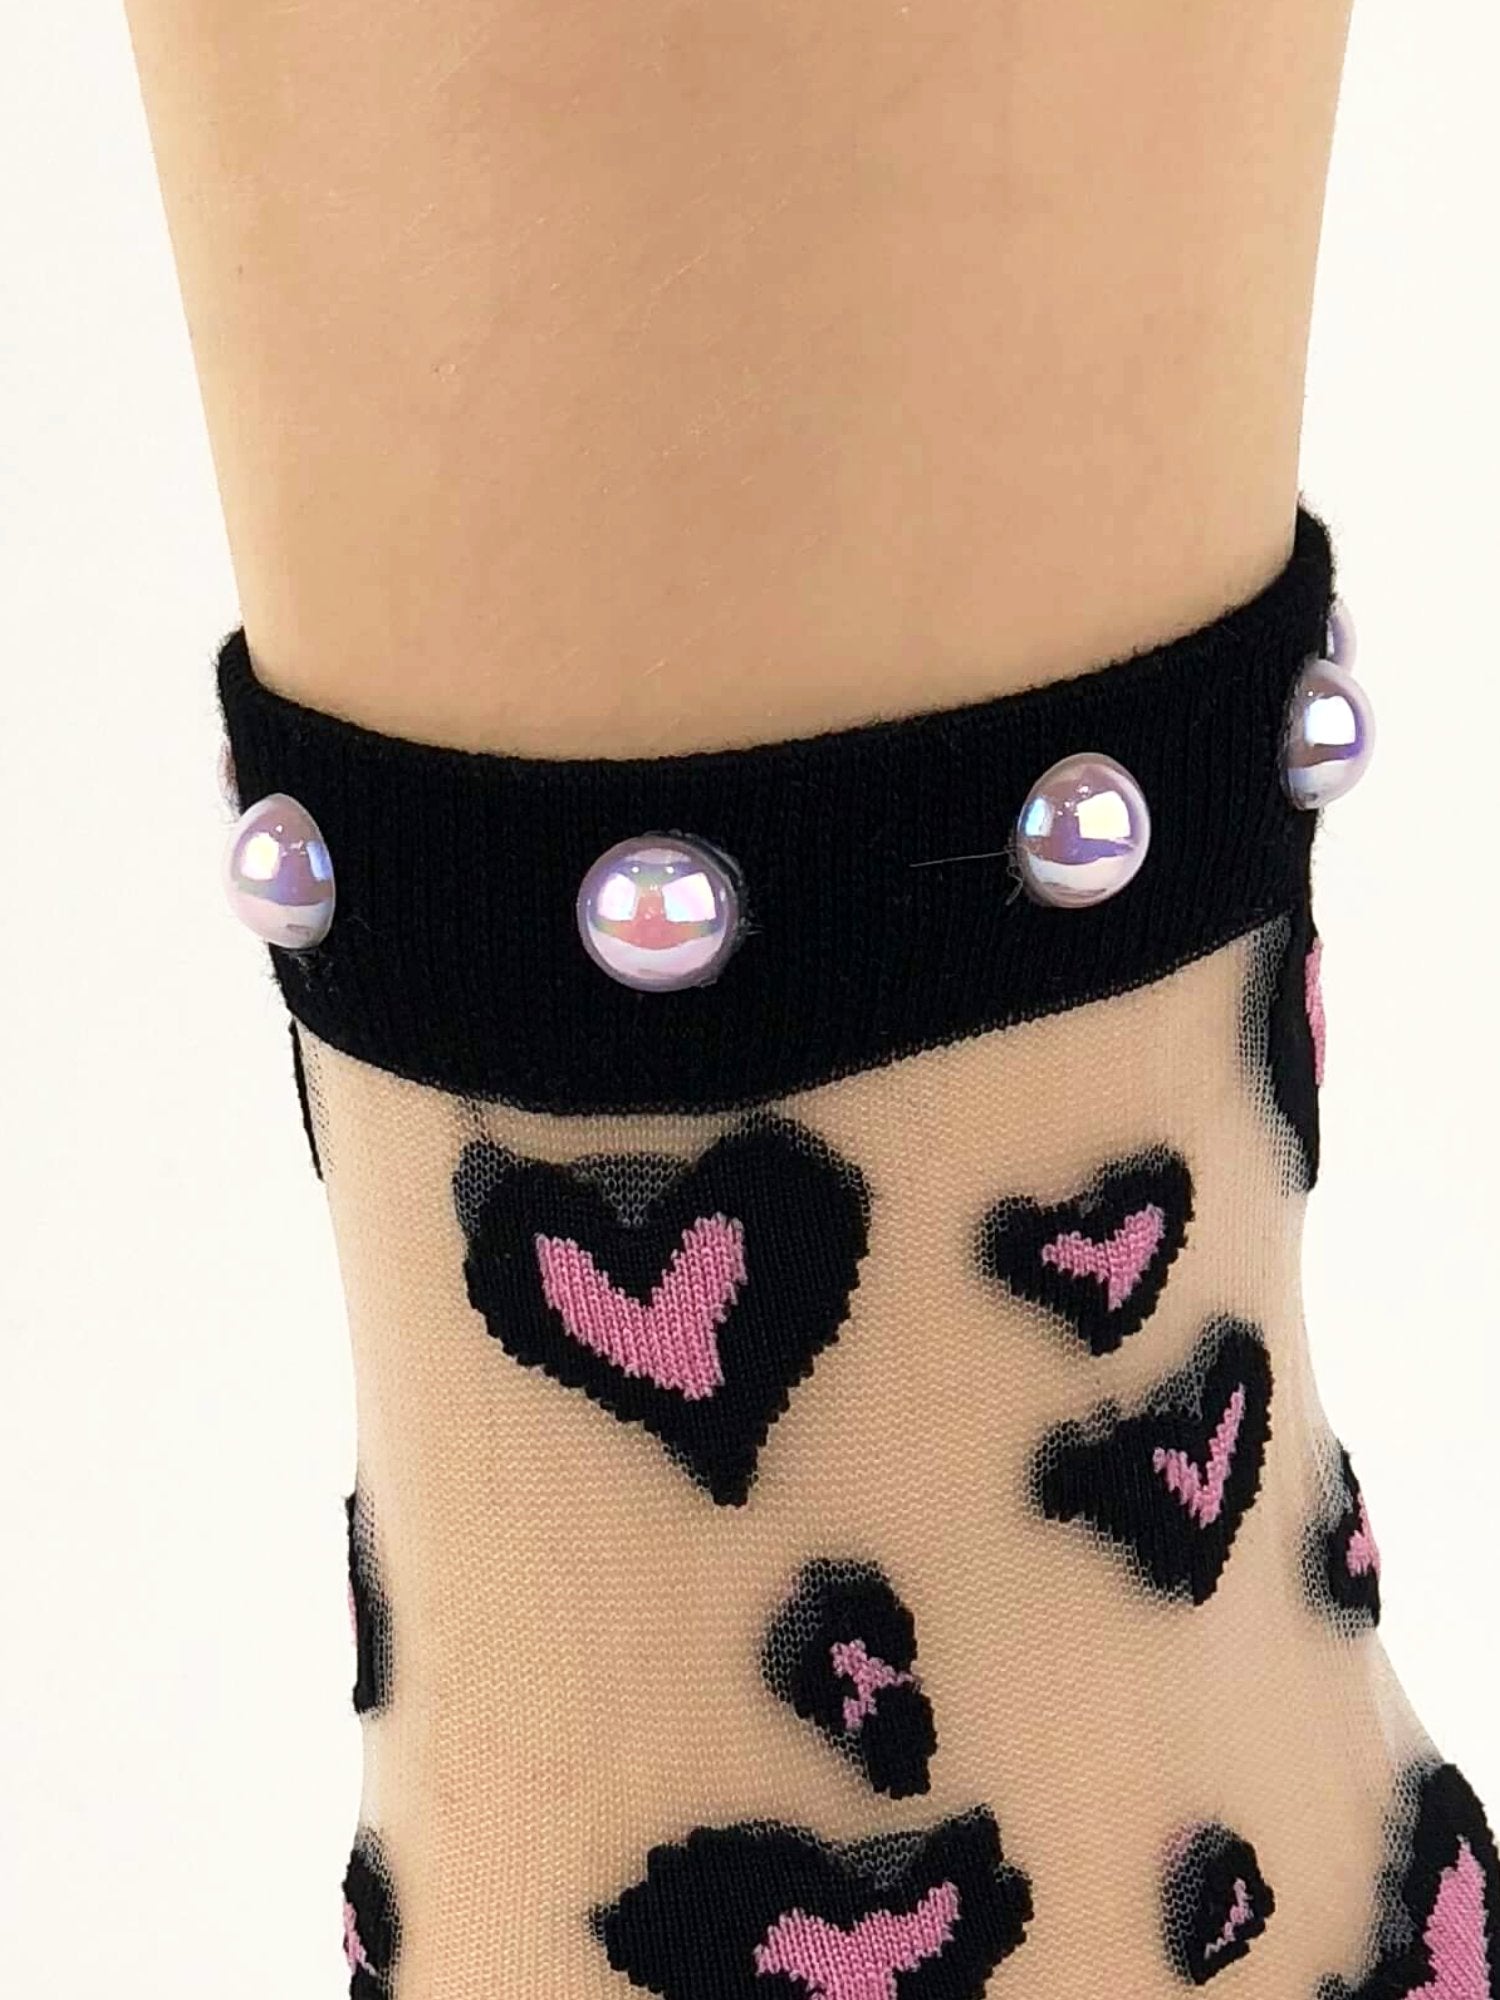 Stunning Black/Pink Flower Sheer Socks - Global Trendz Fashion®